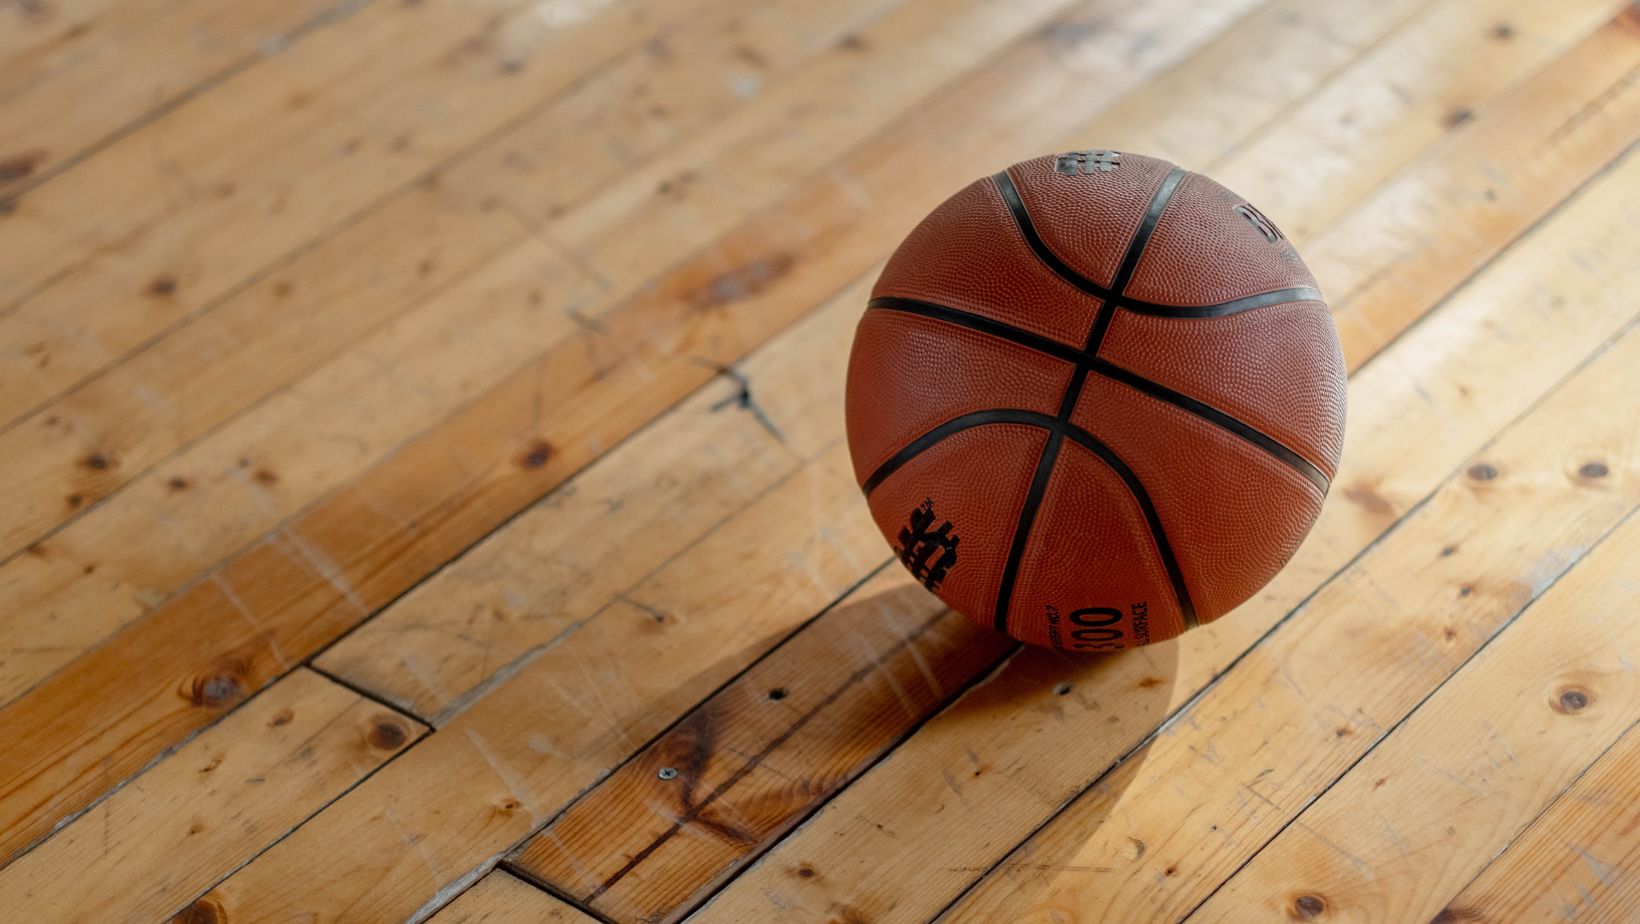 How Do You Make an Outdoor Basketball Court Grippy?